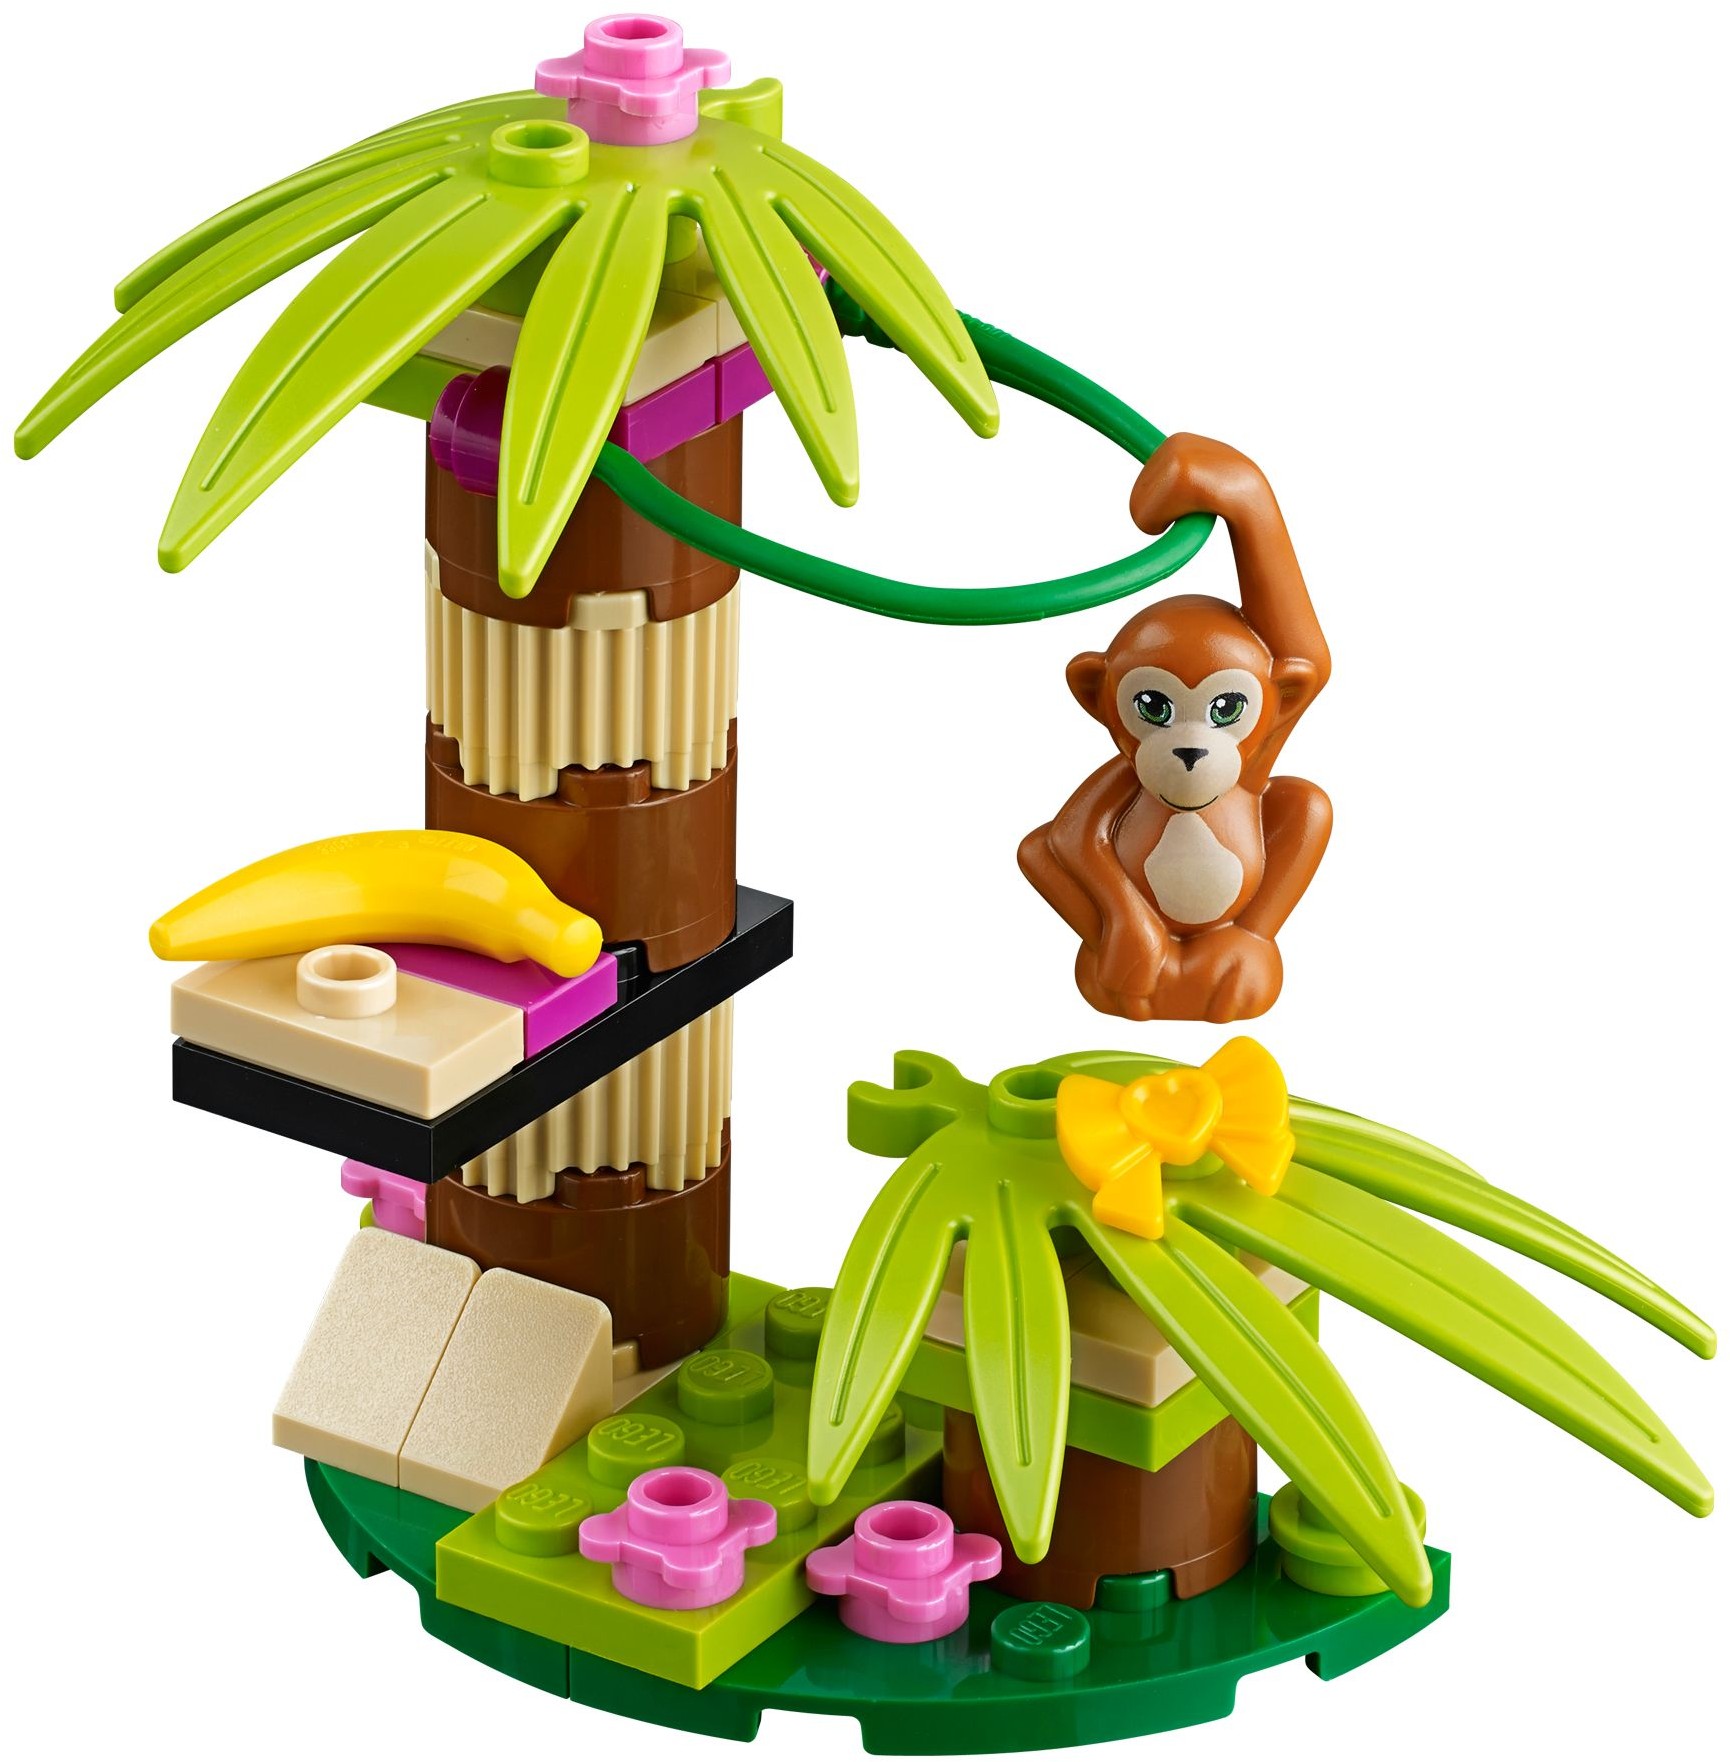 from Indiana Jones ☀️NEW Lego Friends Animal Pet Monkey with Banana